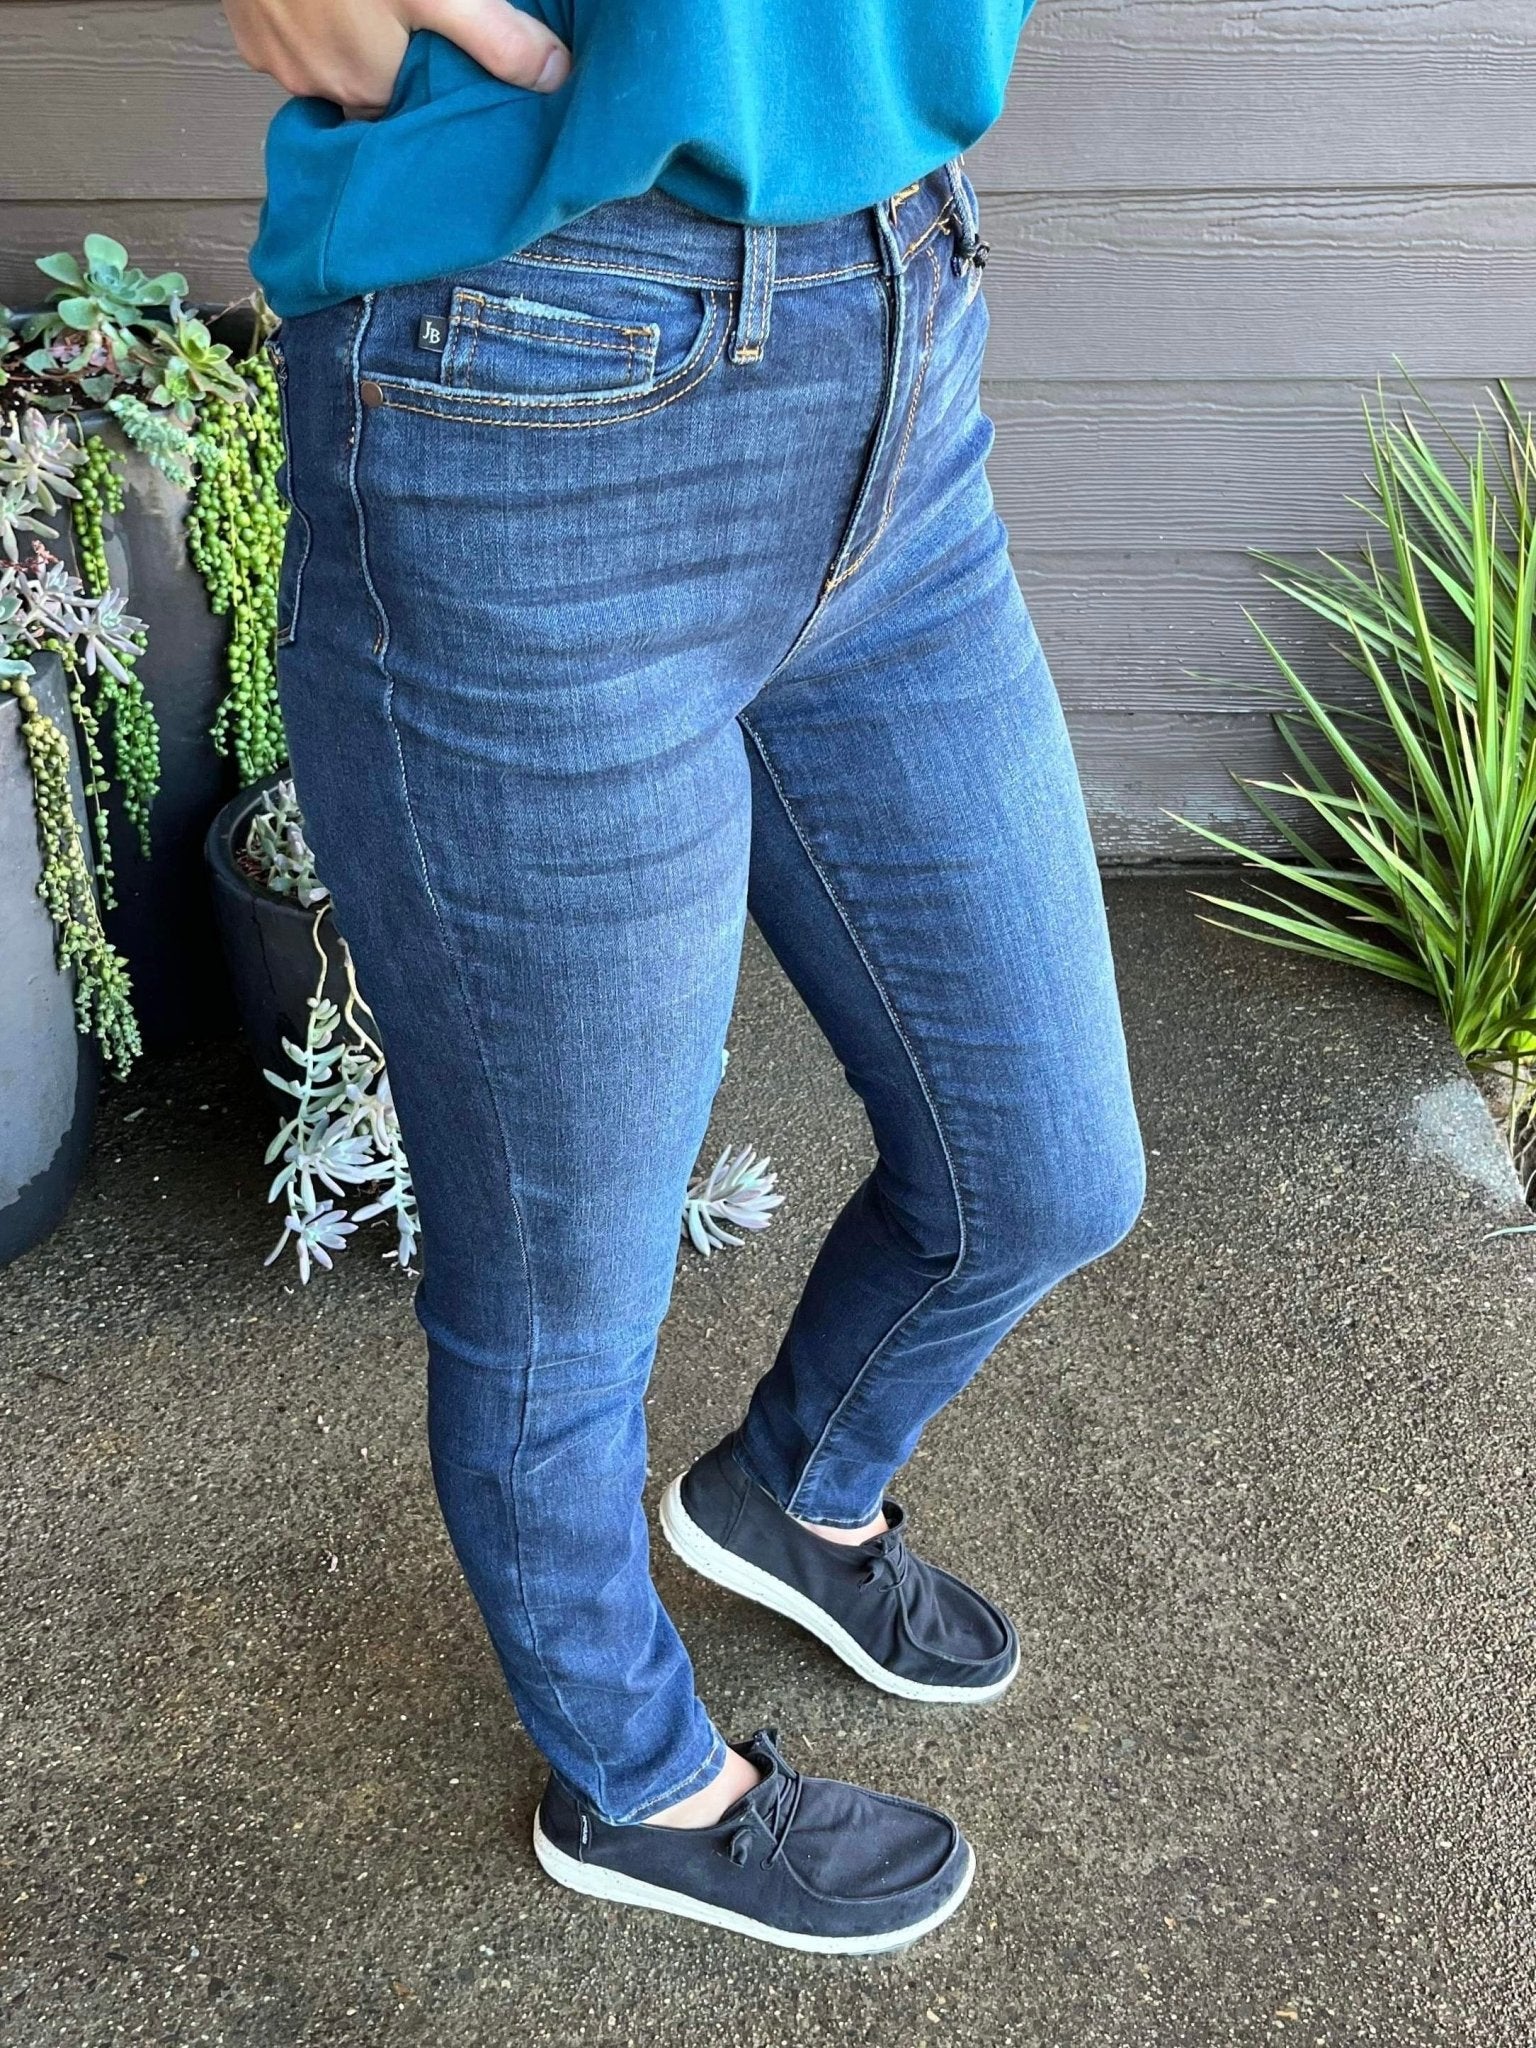 Melrose Relaxed Dark Fit Jeans | 82325REG | Judy Blue - Lavender Hills BeautyJudy Blue